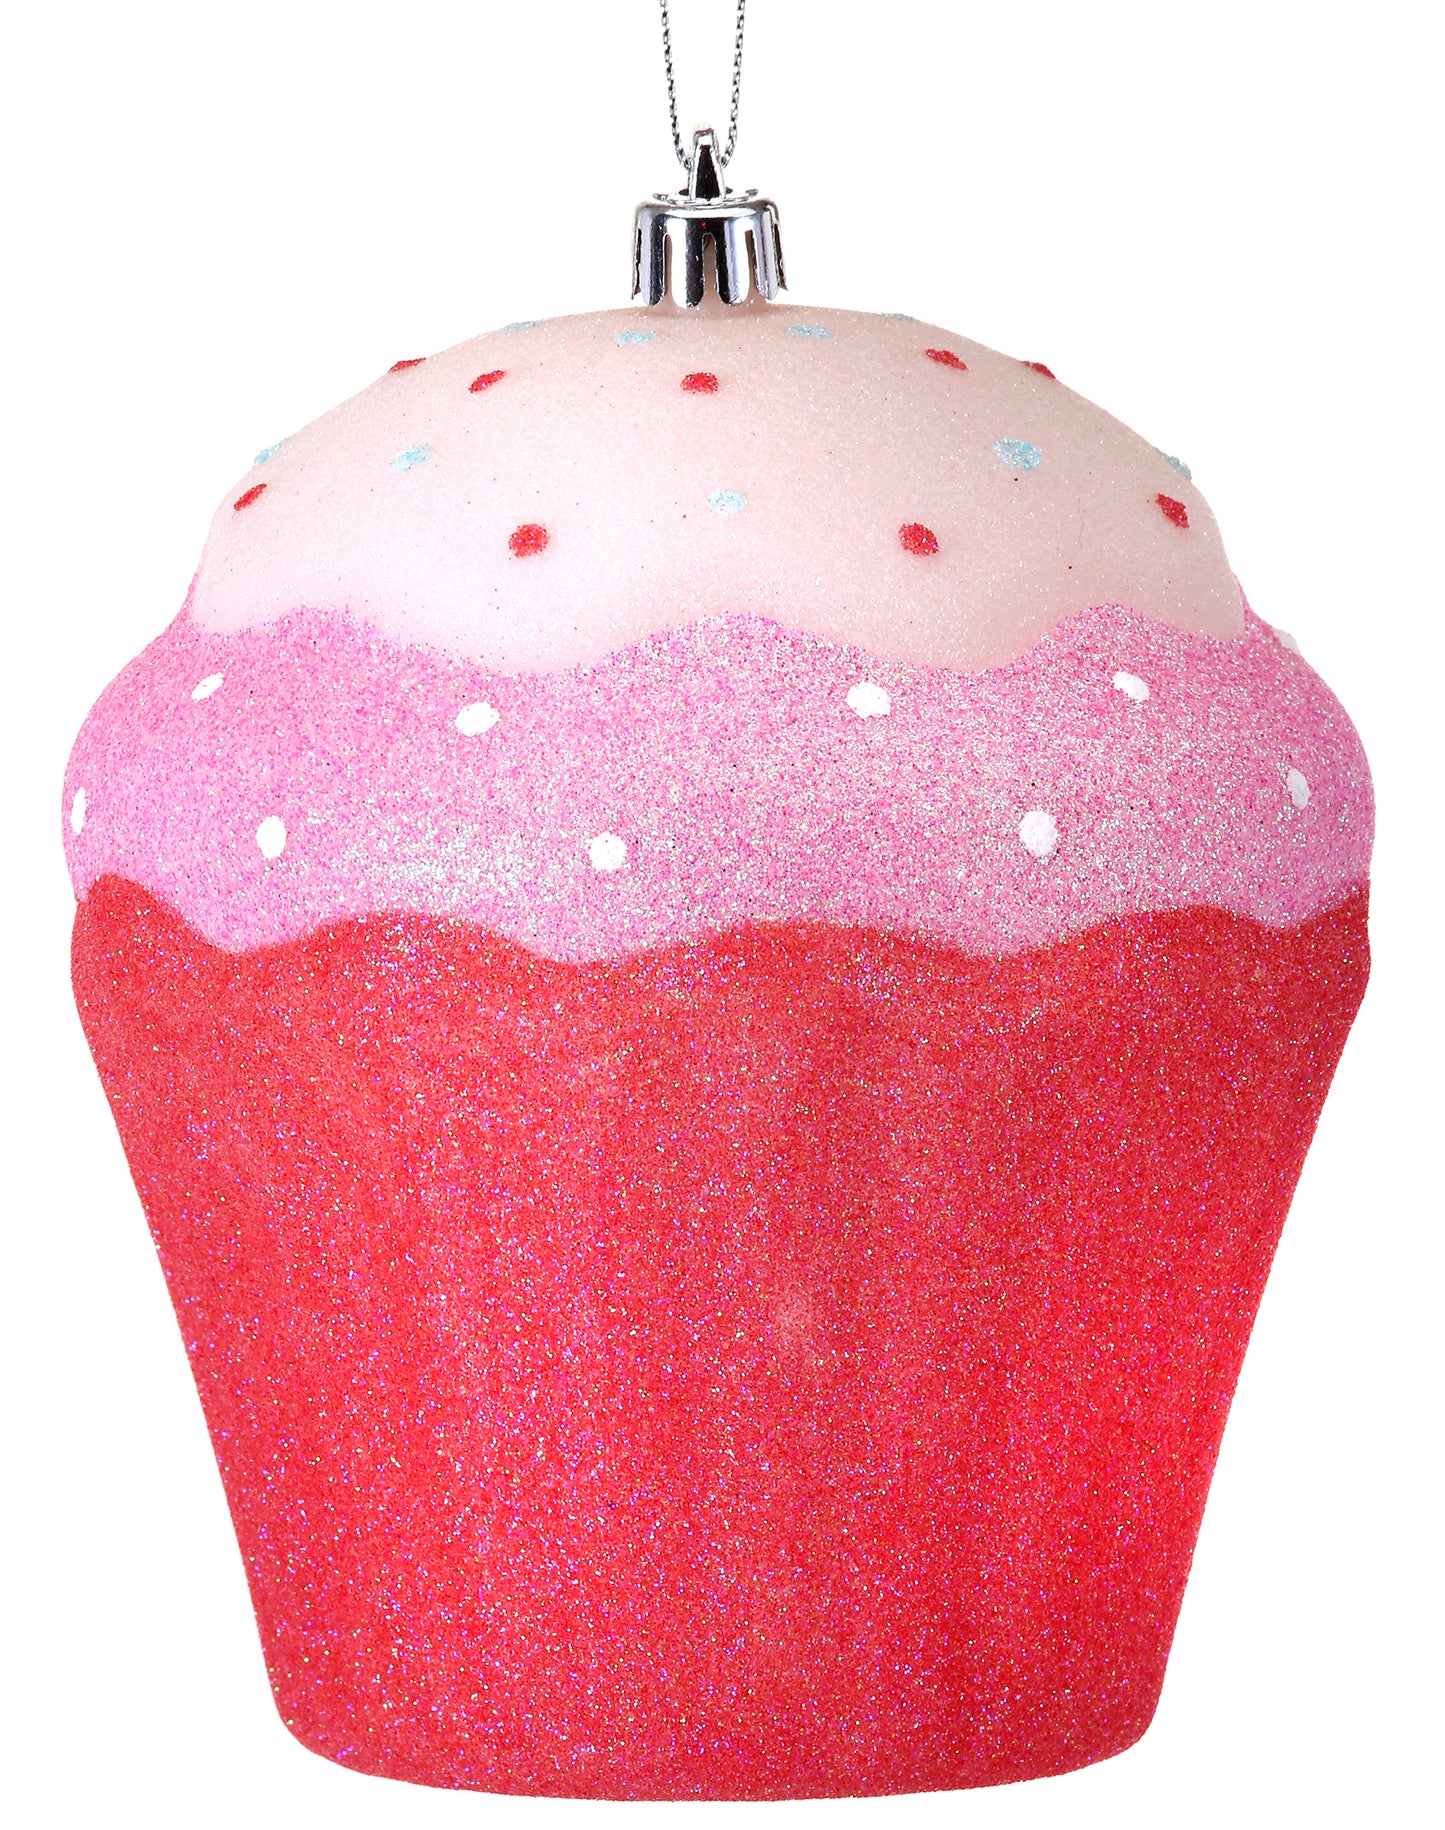 Mrs. Claus' Cupcake Ornament (6.5")